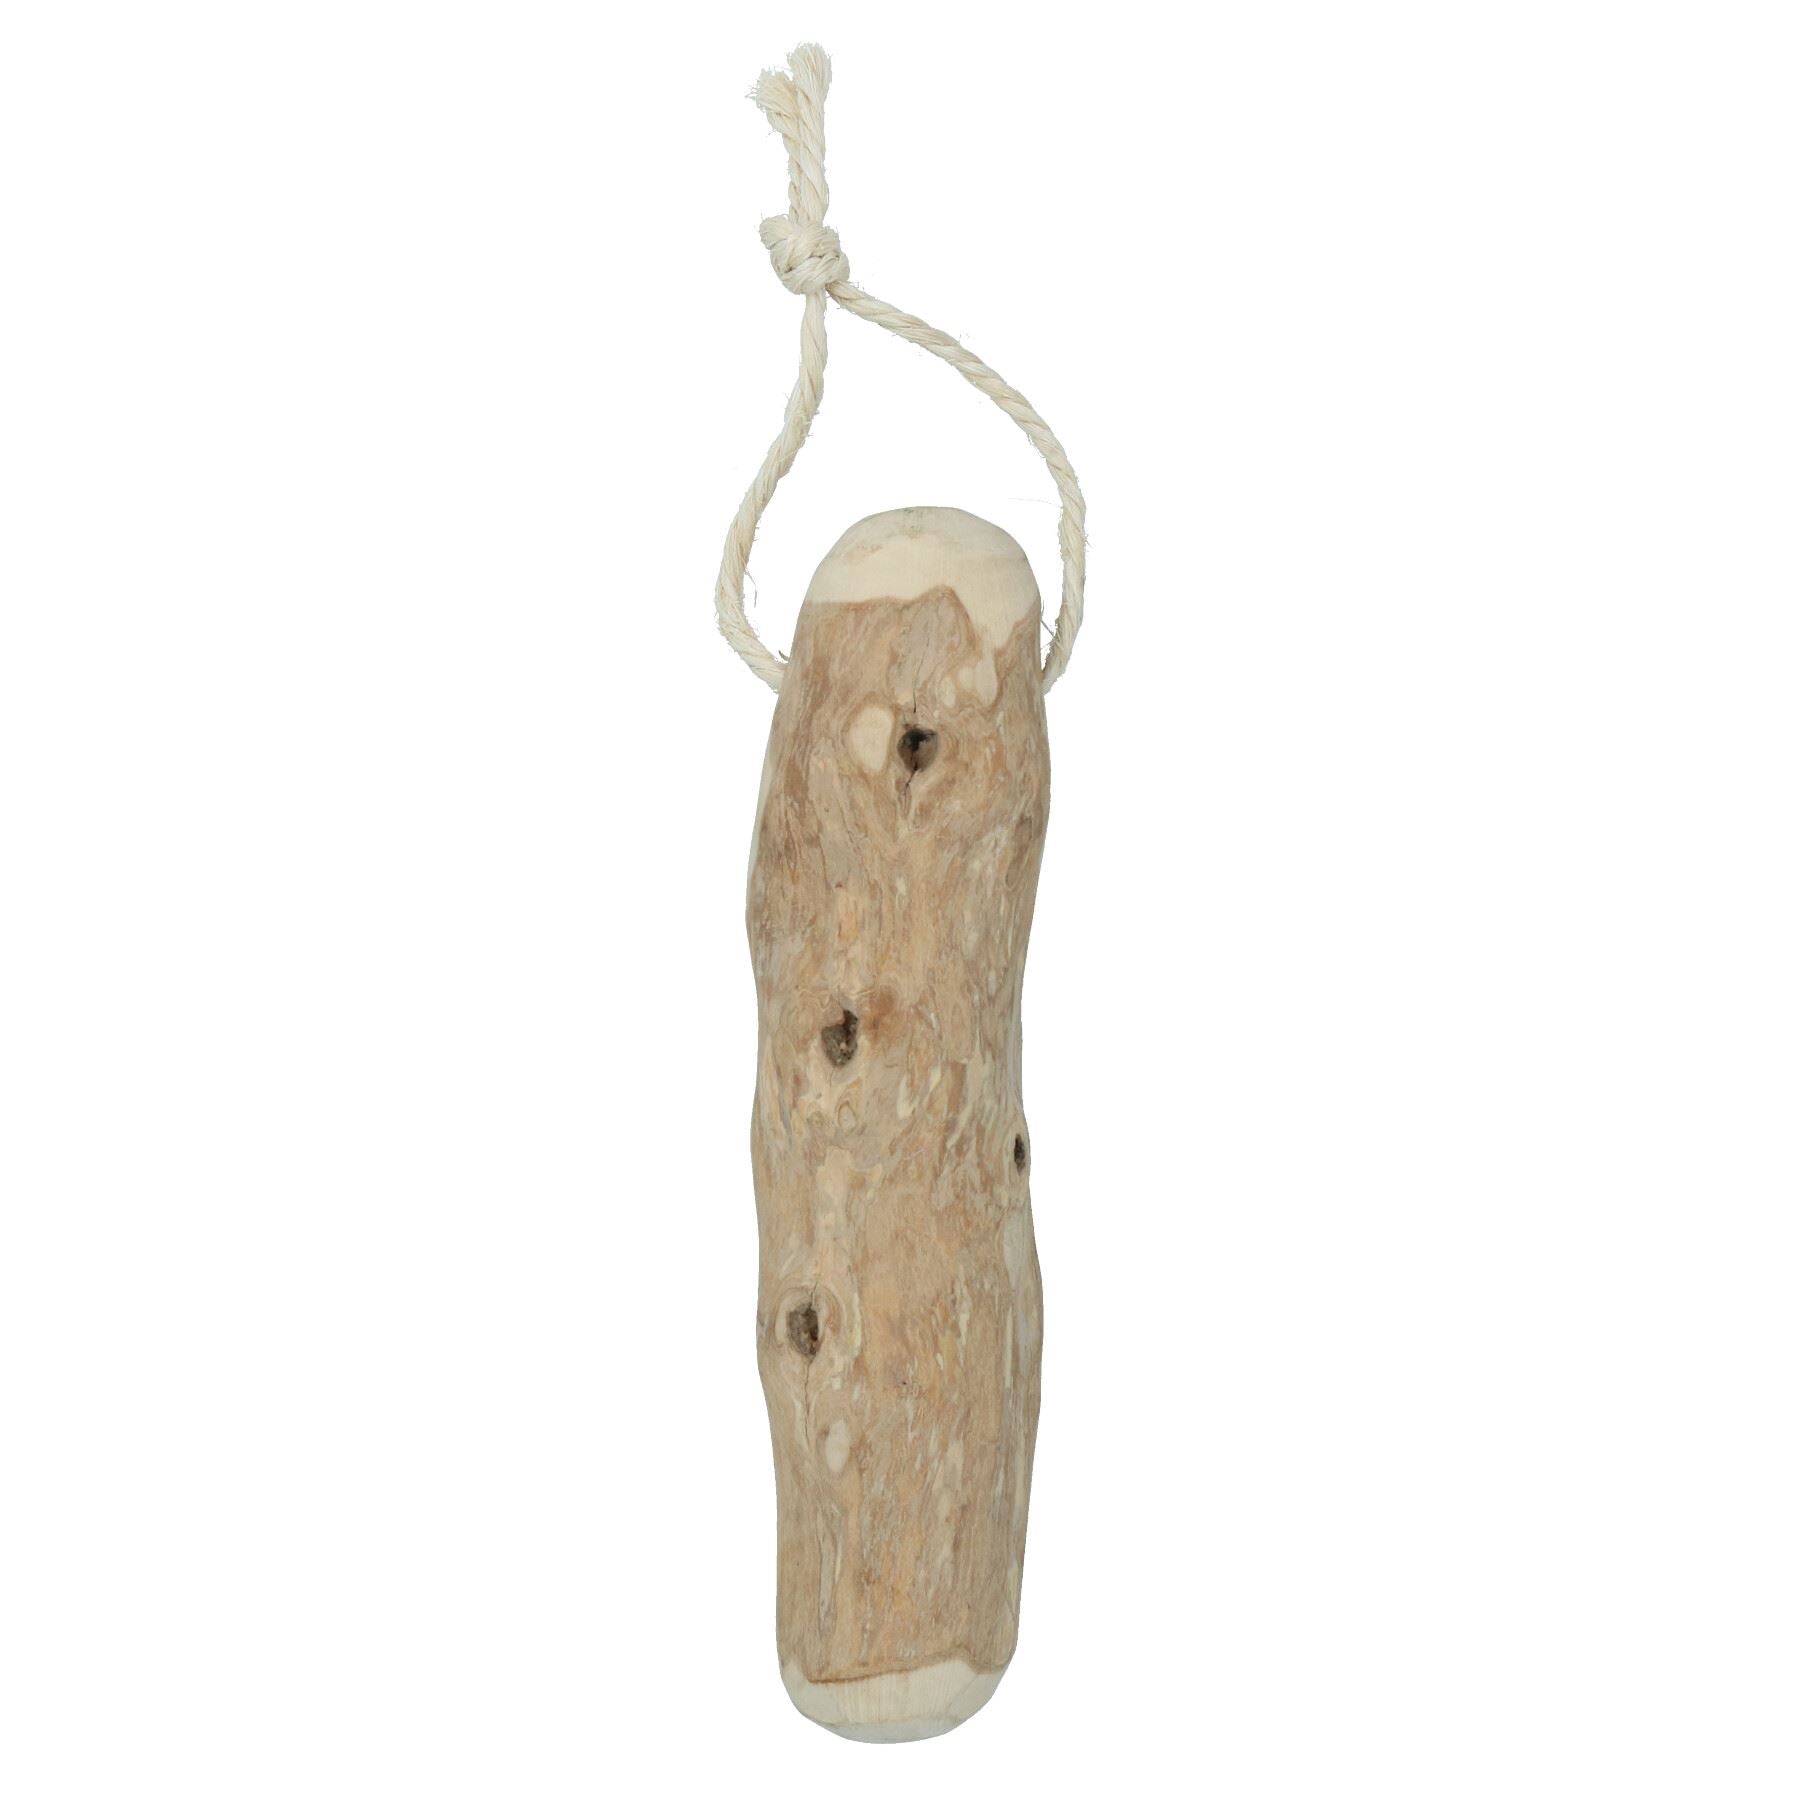 Medium Natural Dog Chew Toy Mental Stimulation Goodwood 200-300g Stick